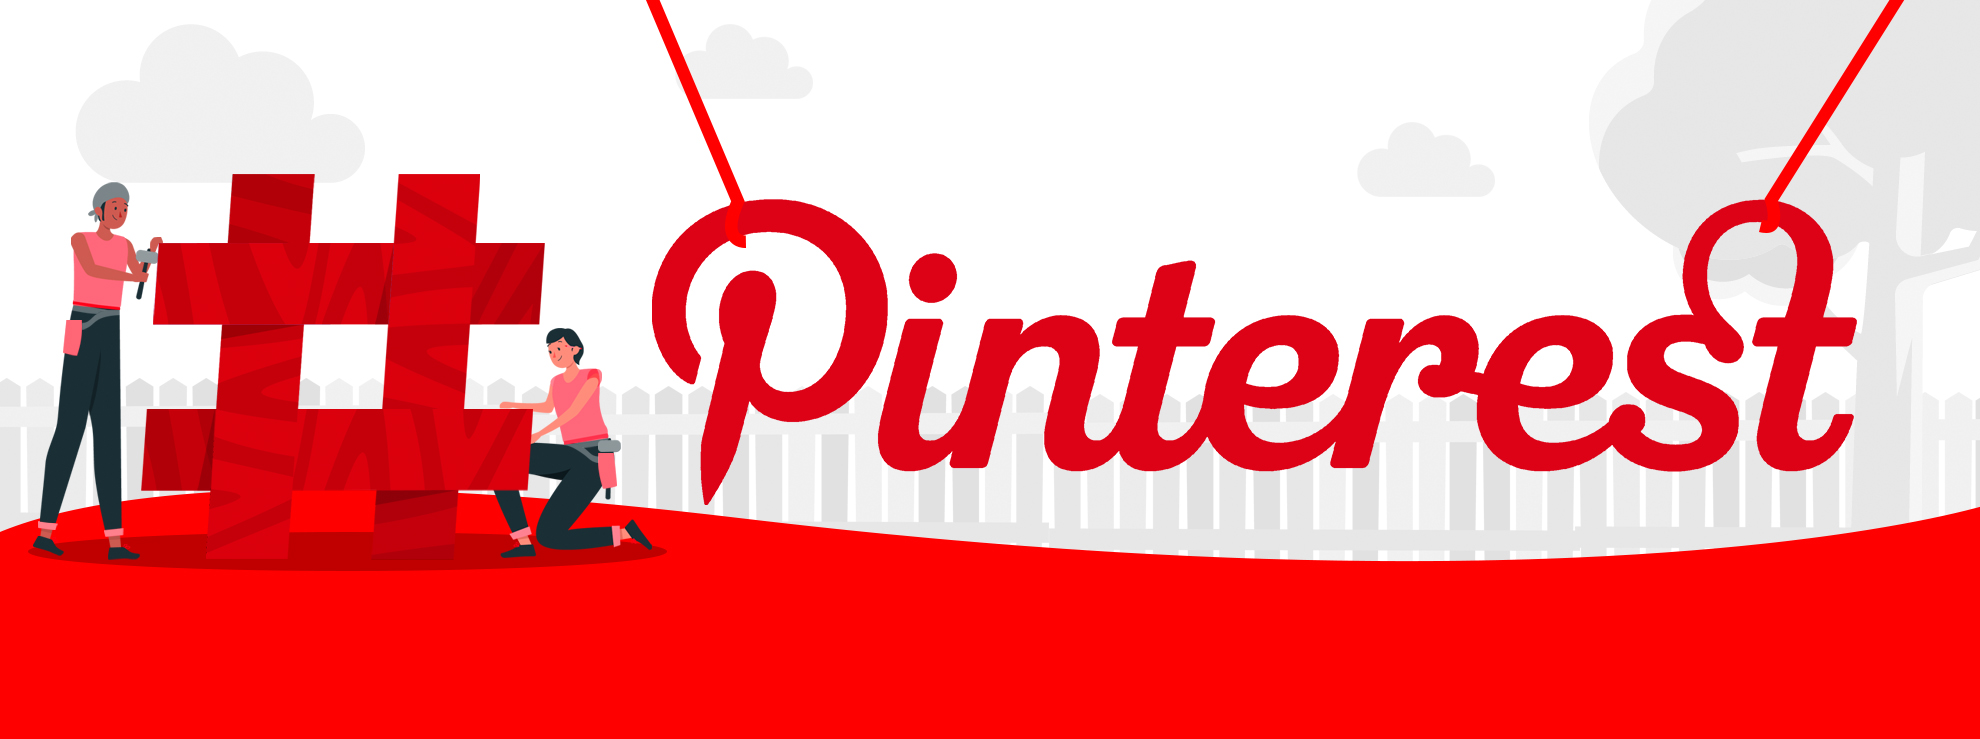 pinterest marketing company in India 